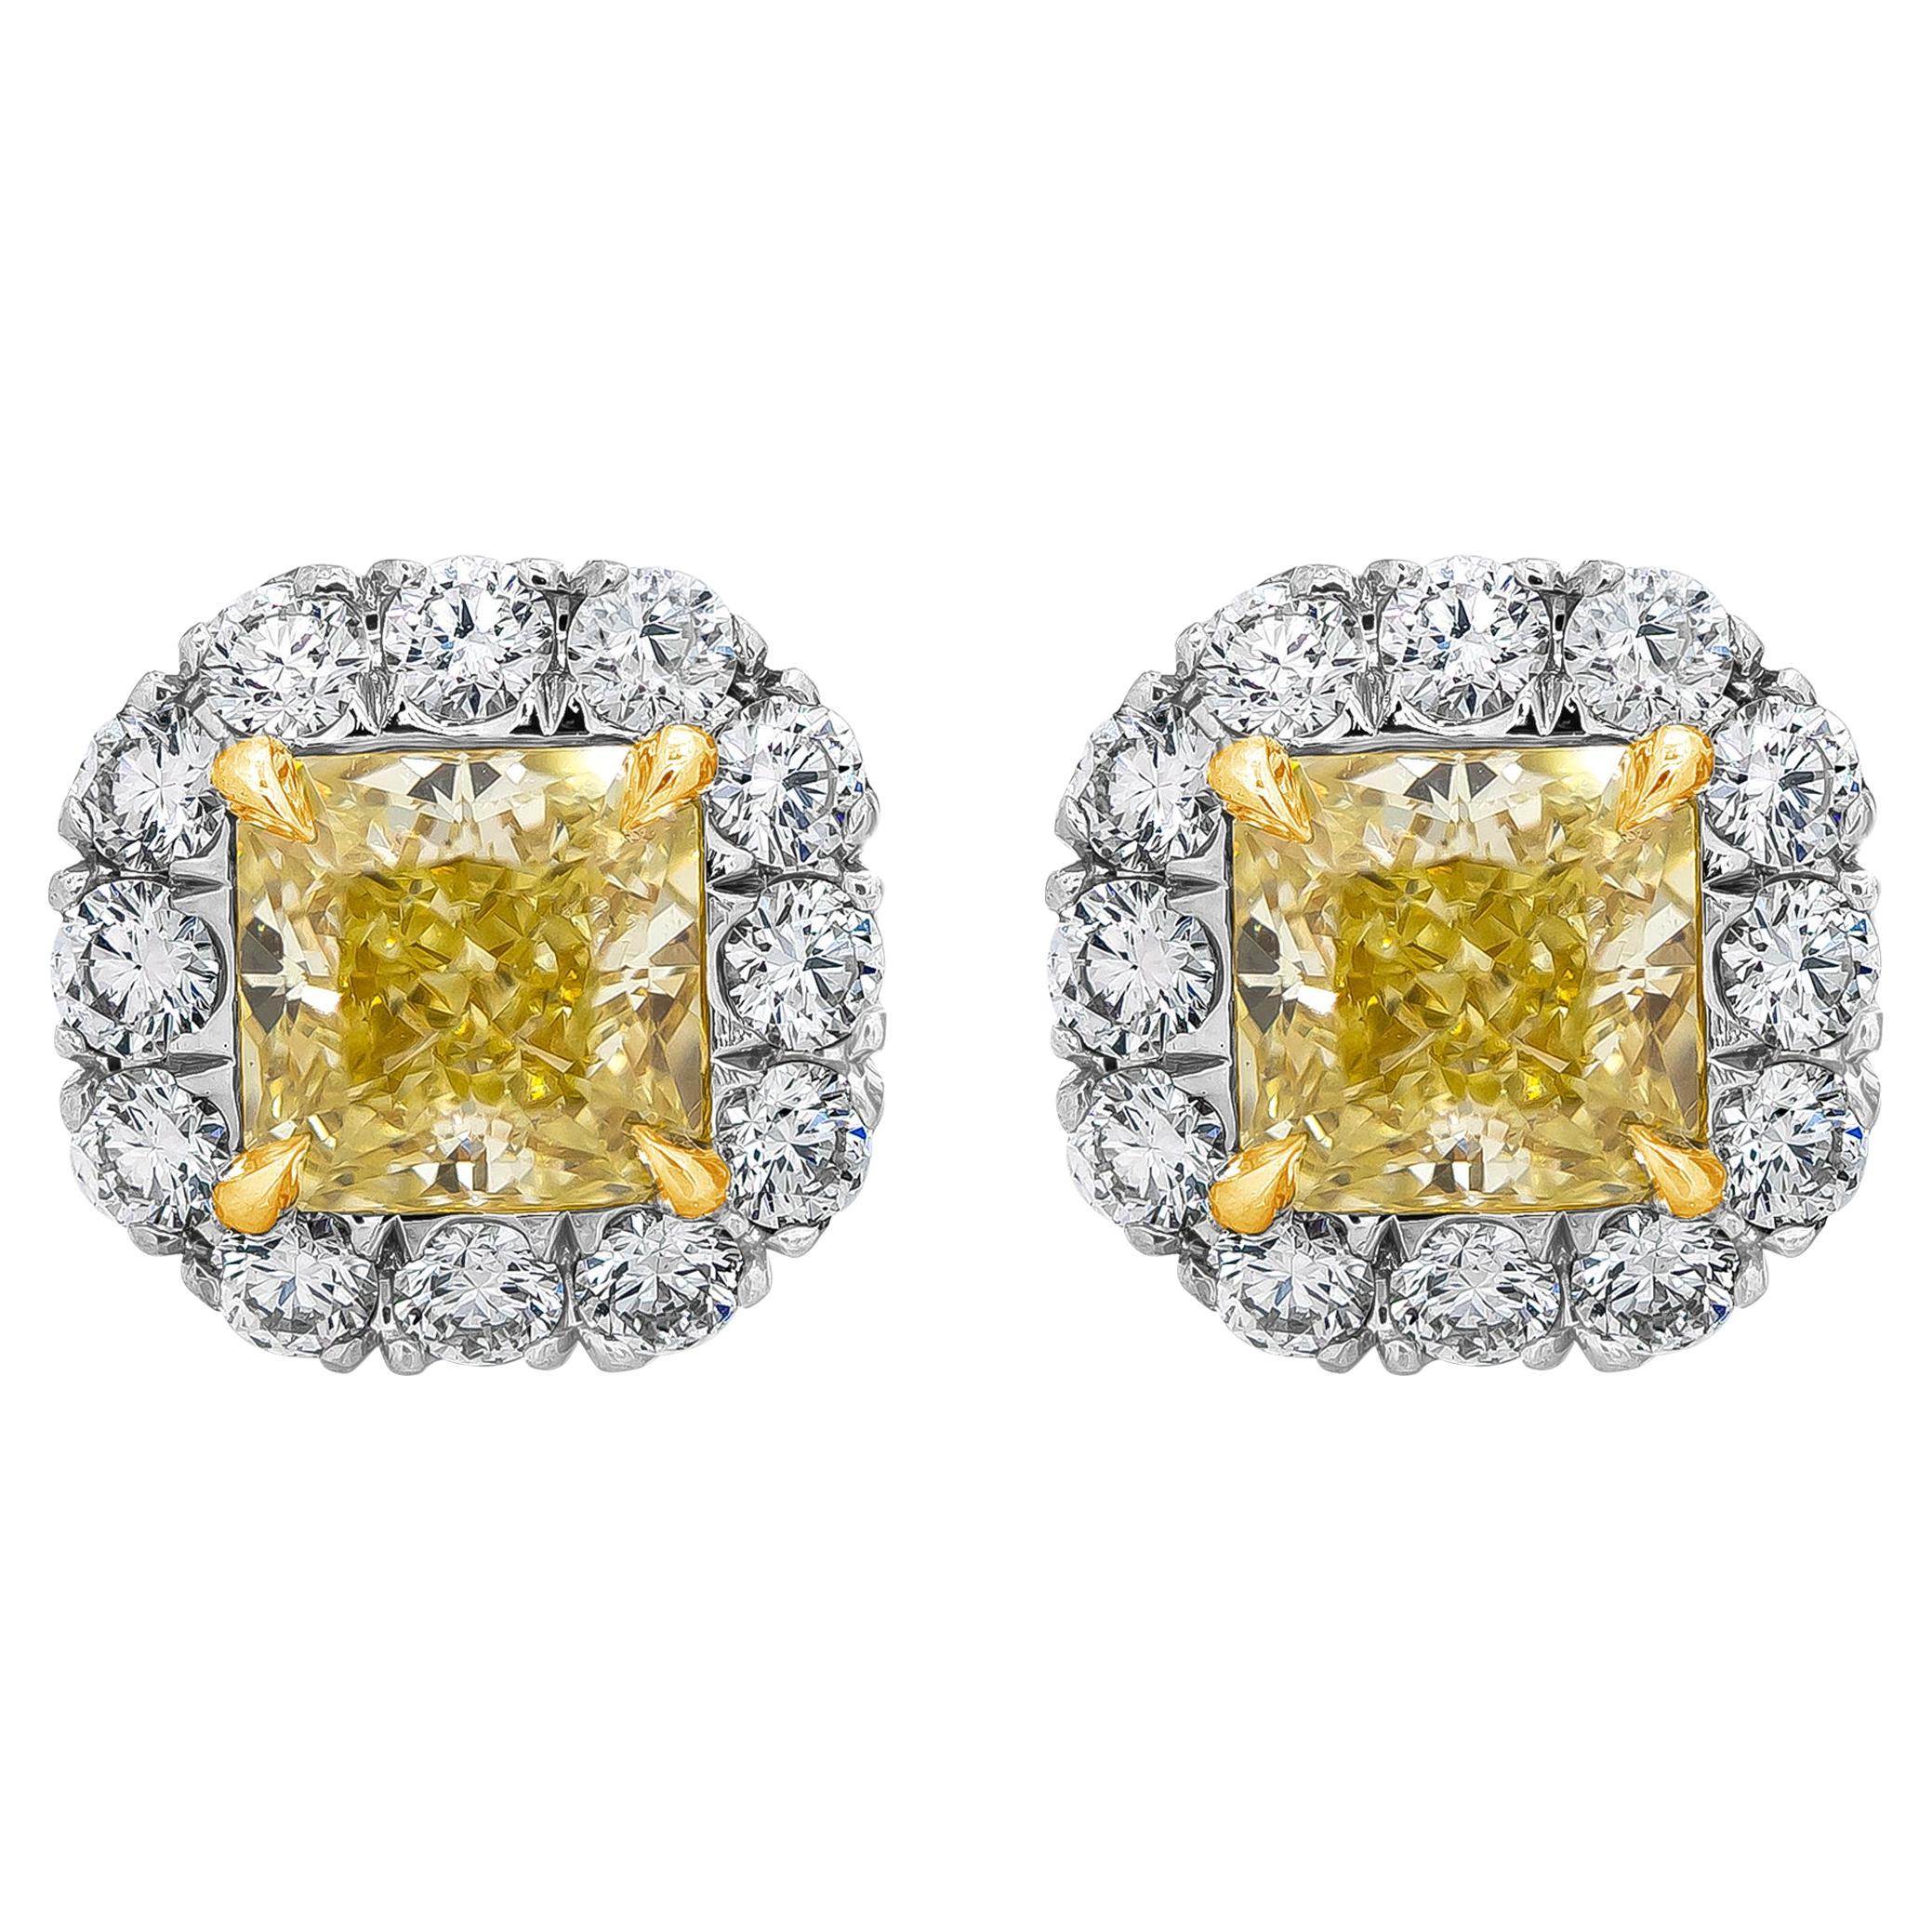 GIA Certified 1.45 Carats Total Radiant Cut Fancy Yellow Diamond Stud Earrings For Sale